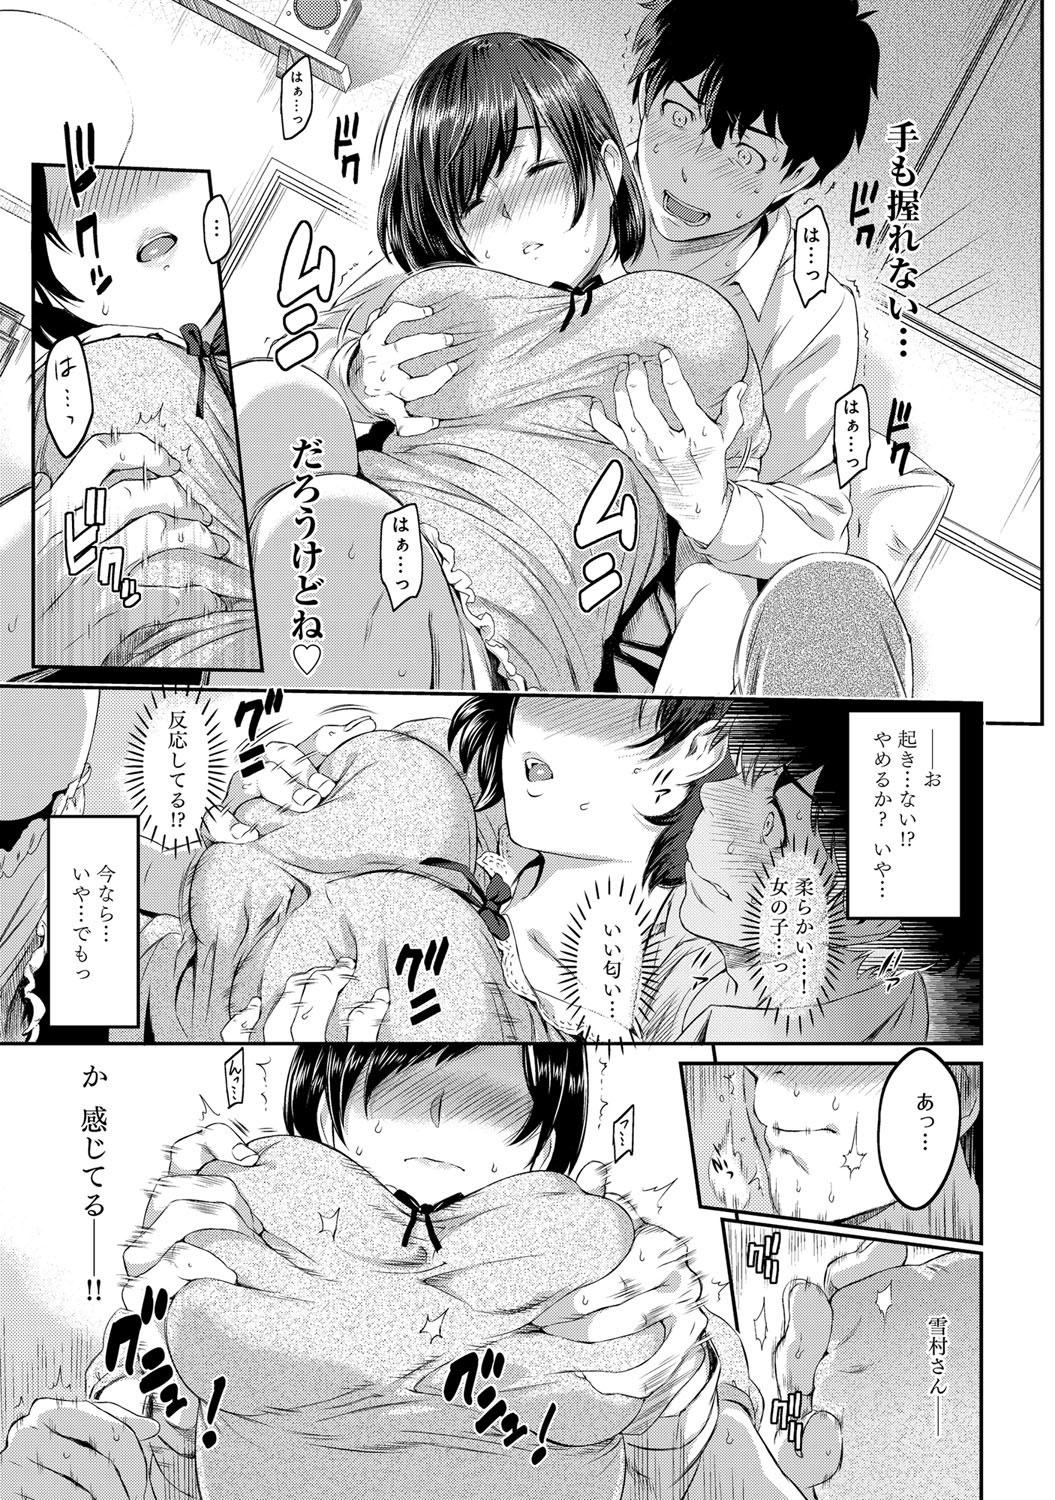 Homo Kizashi 18 Year Old Porn - Page 9